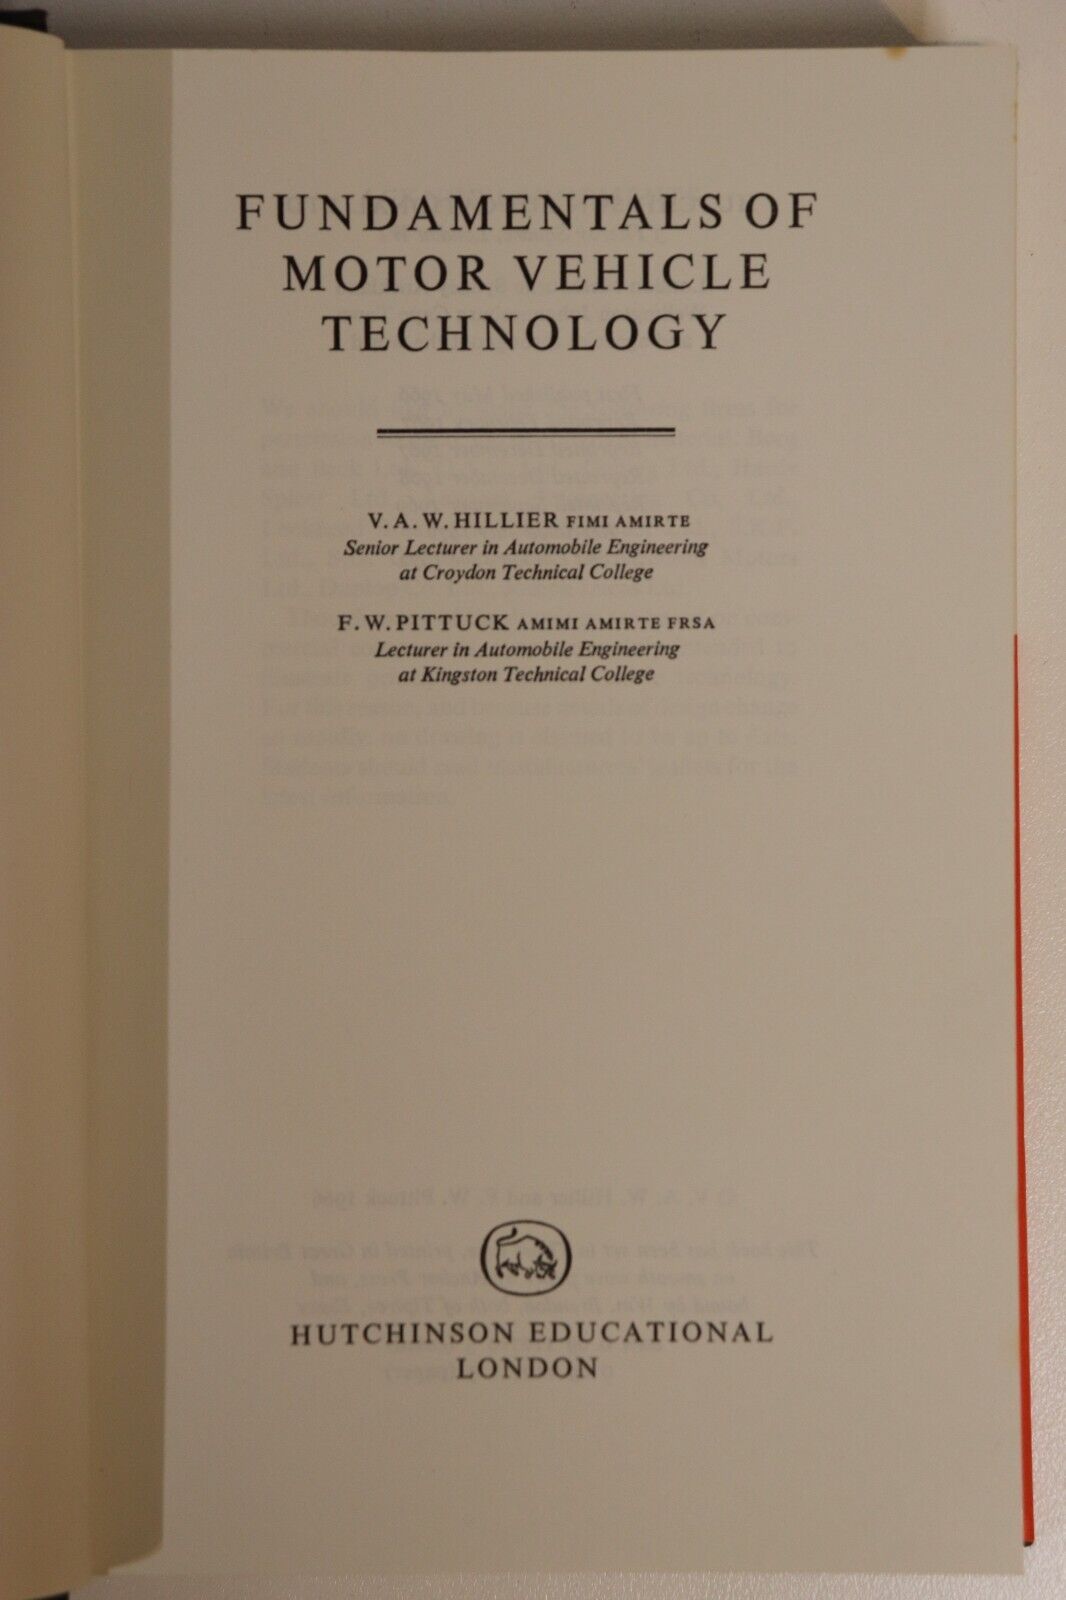 Fundamentals Of Motor Vehicle Technology - 1972 - Vintage Automotive Book